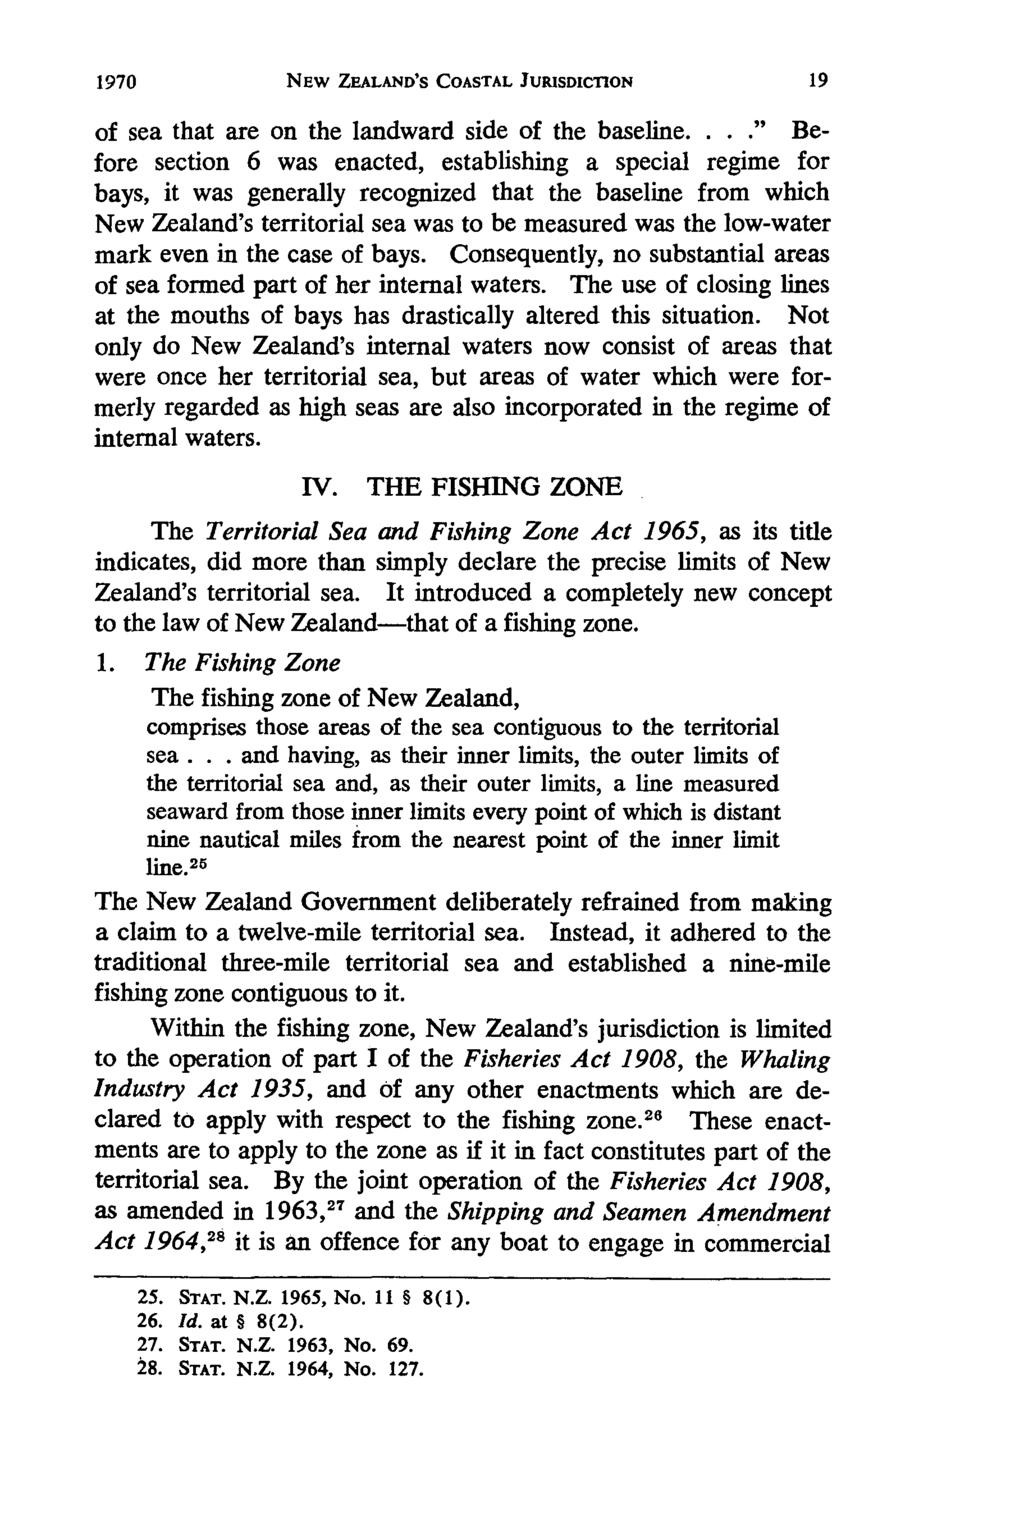 1970 Foster: New Zealand's Coastal Jurisdiction NEW ZEALAND'S COASTAL JURISDICTION of sea that are on the landward side of the baseline.